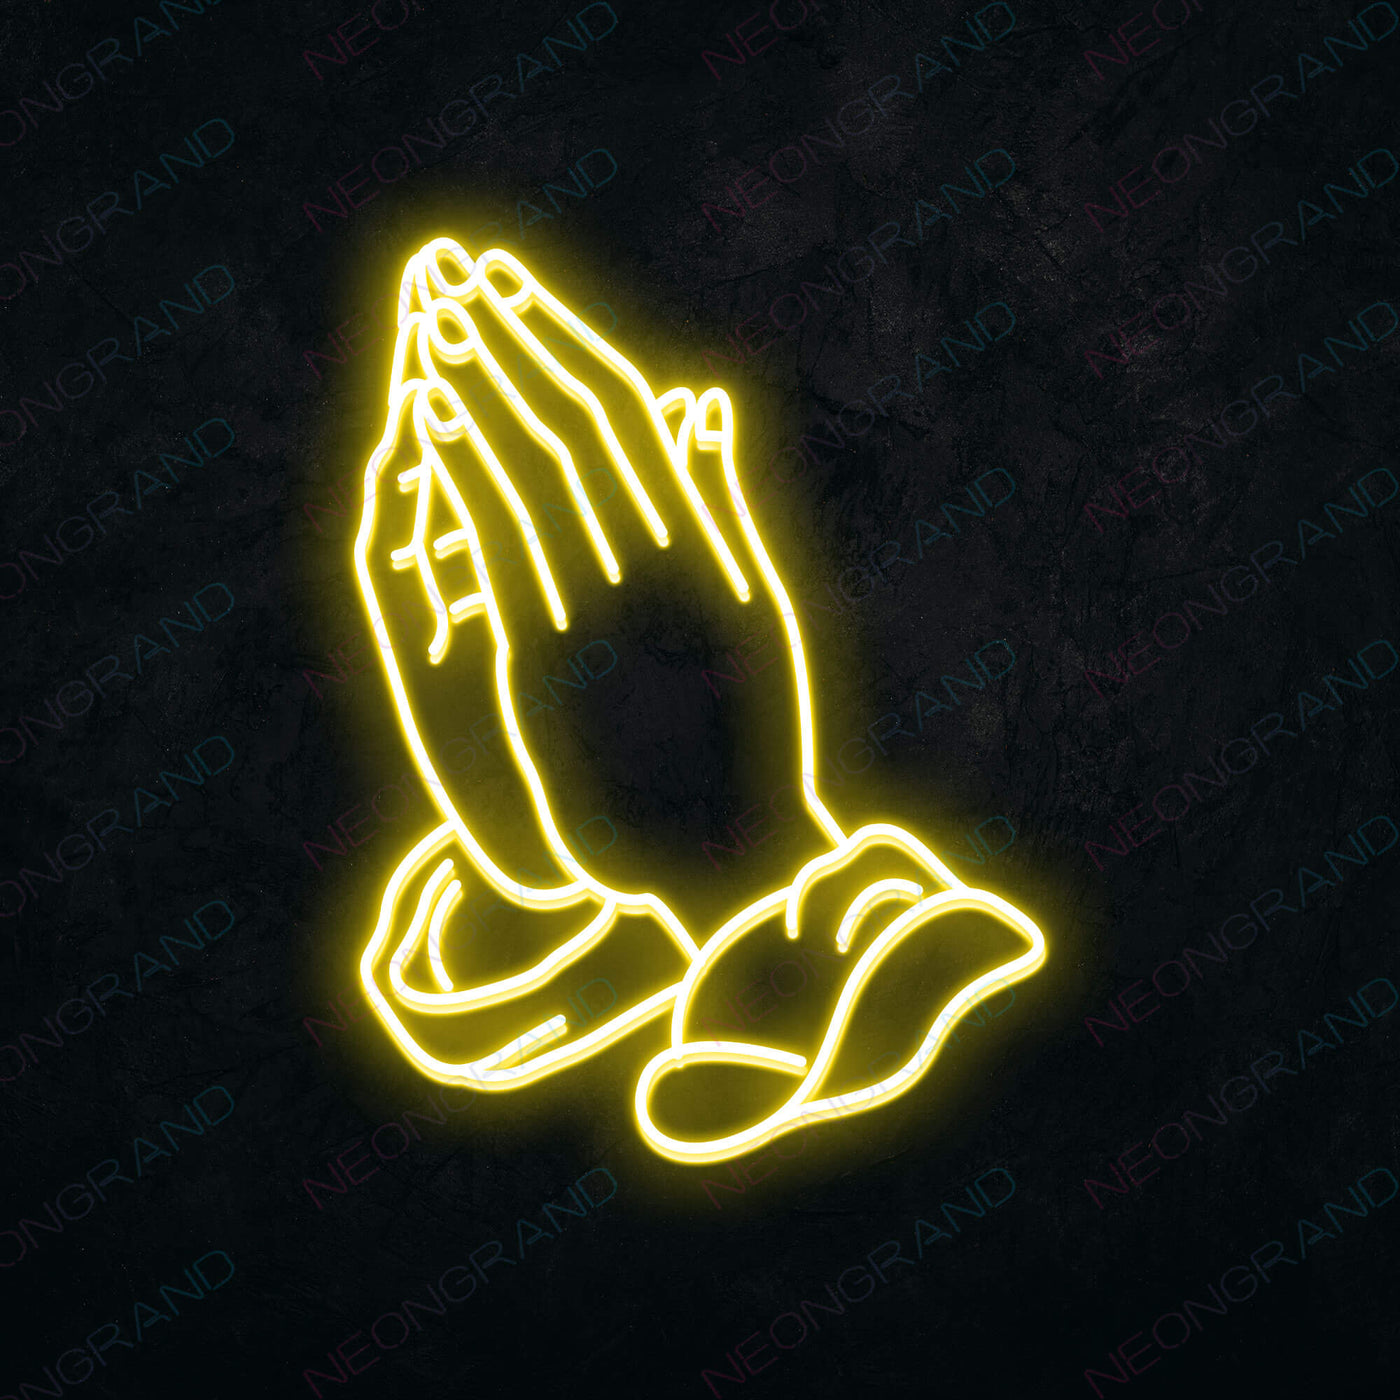 Neon Praying Hands Sign Led Light yellow